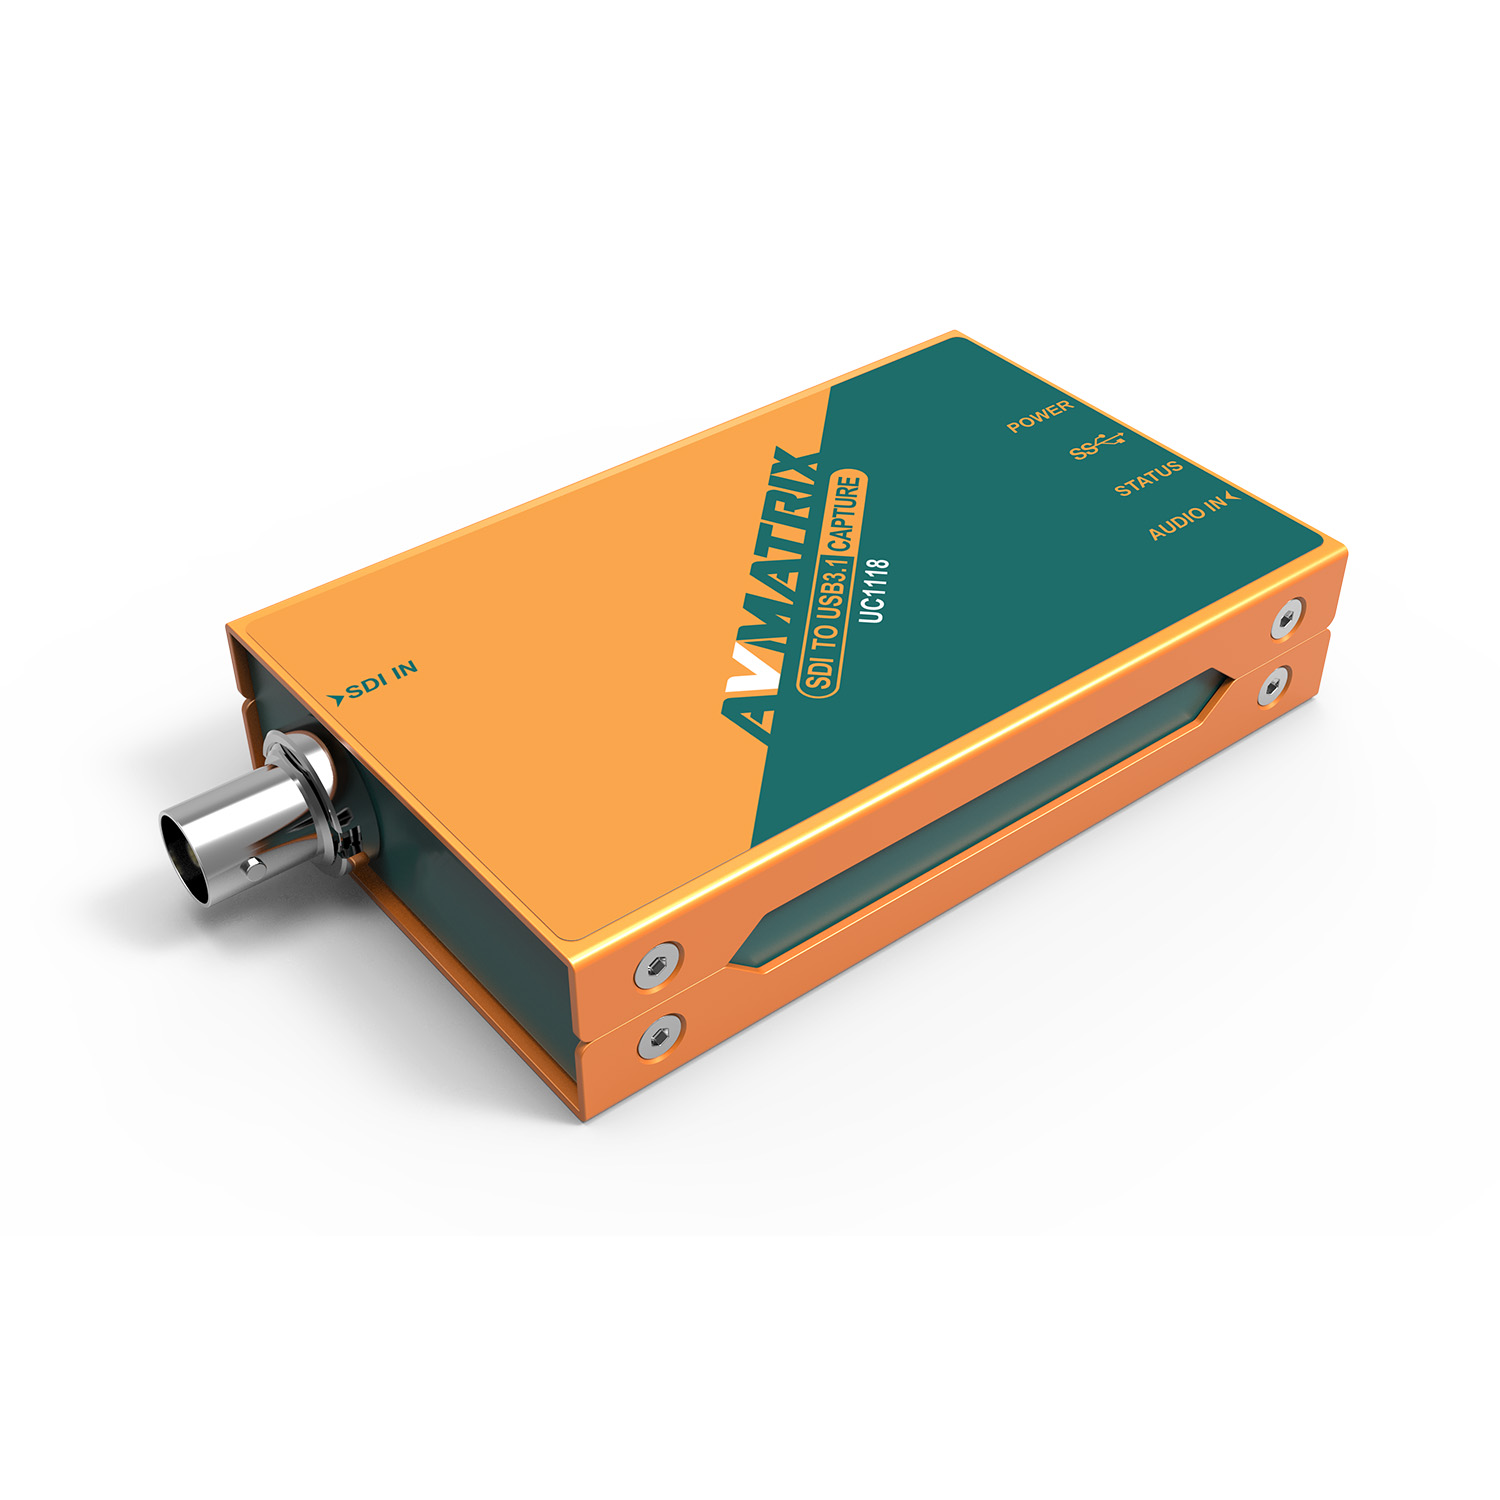    AVMATRIX UC1118 SDI USB   Ultra-mart